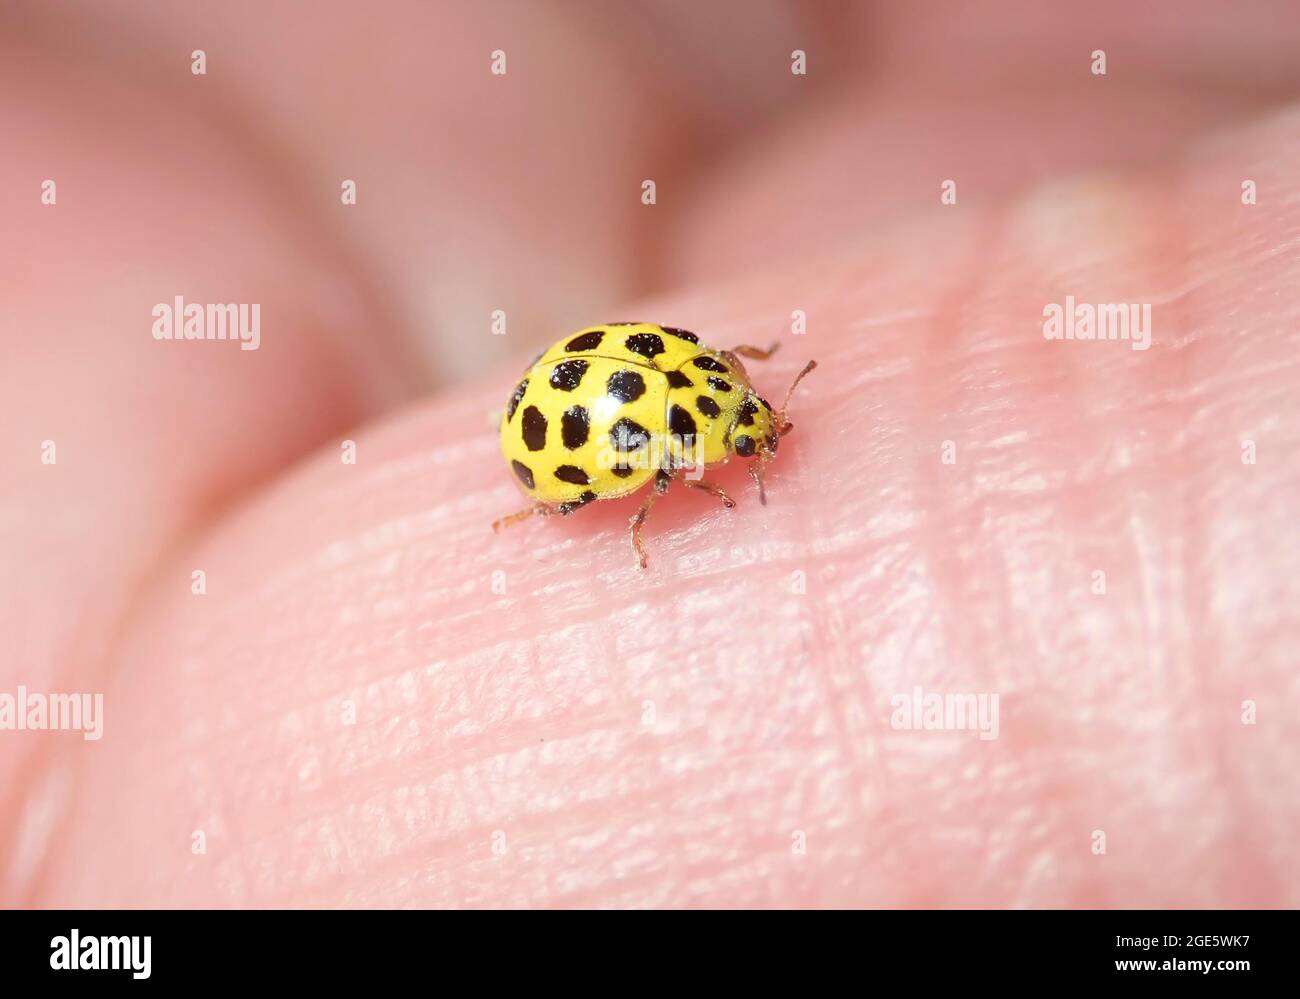 Mariquita de 22 puntos (Psyllobora vigintiduopunctata) o de veintidós puntos, insecto beneficioso, Alemania Foto de stock